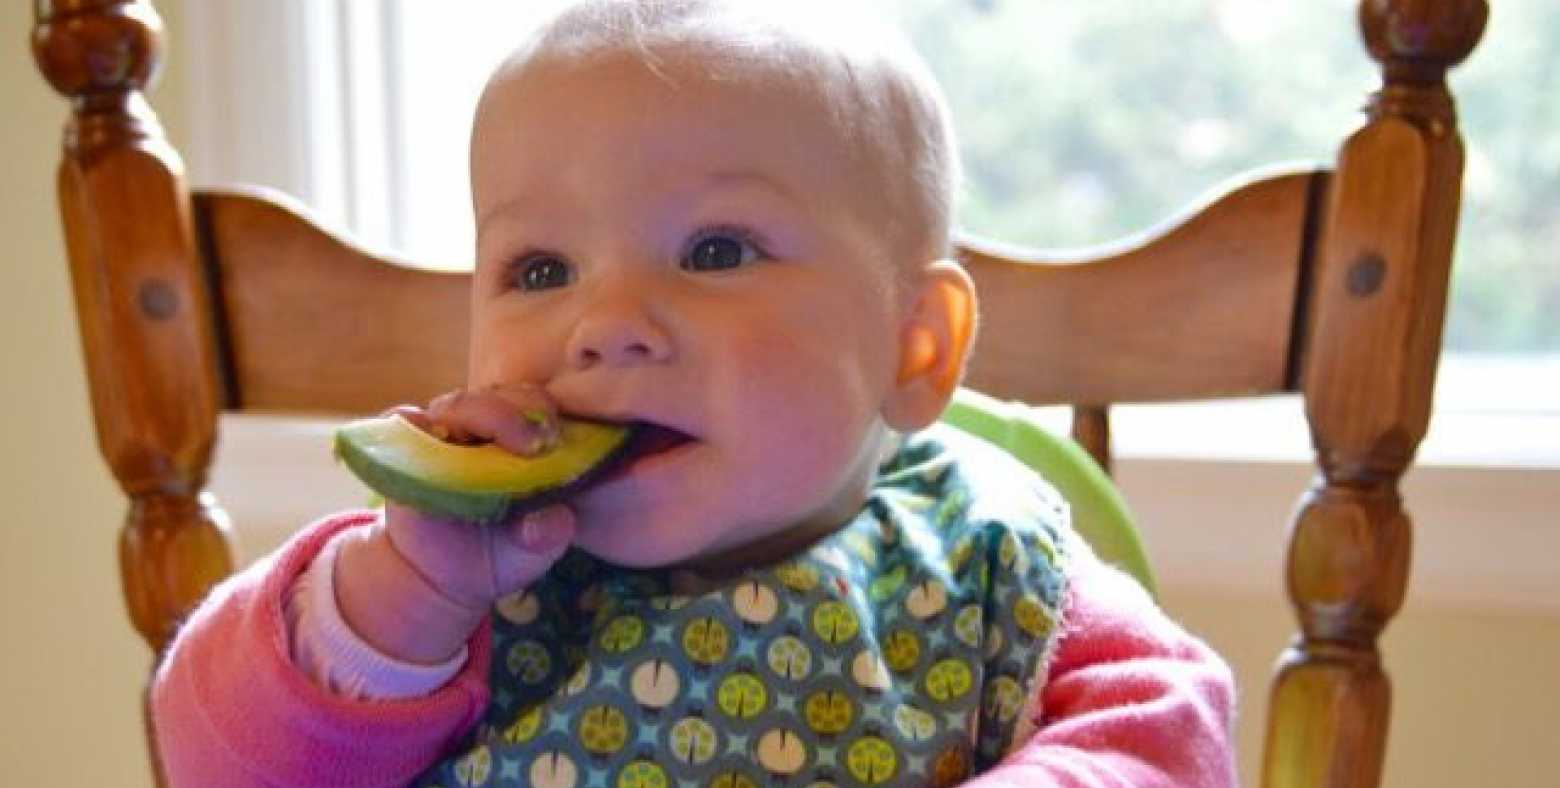 baby on high char eating slice of avocado